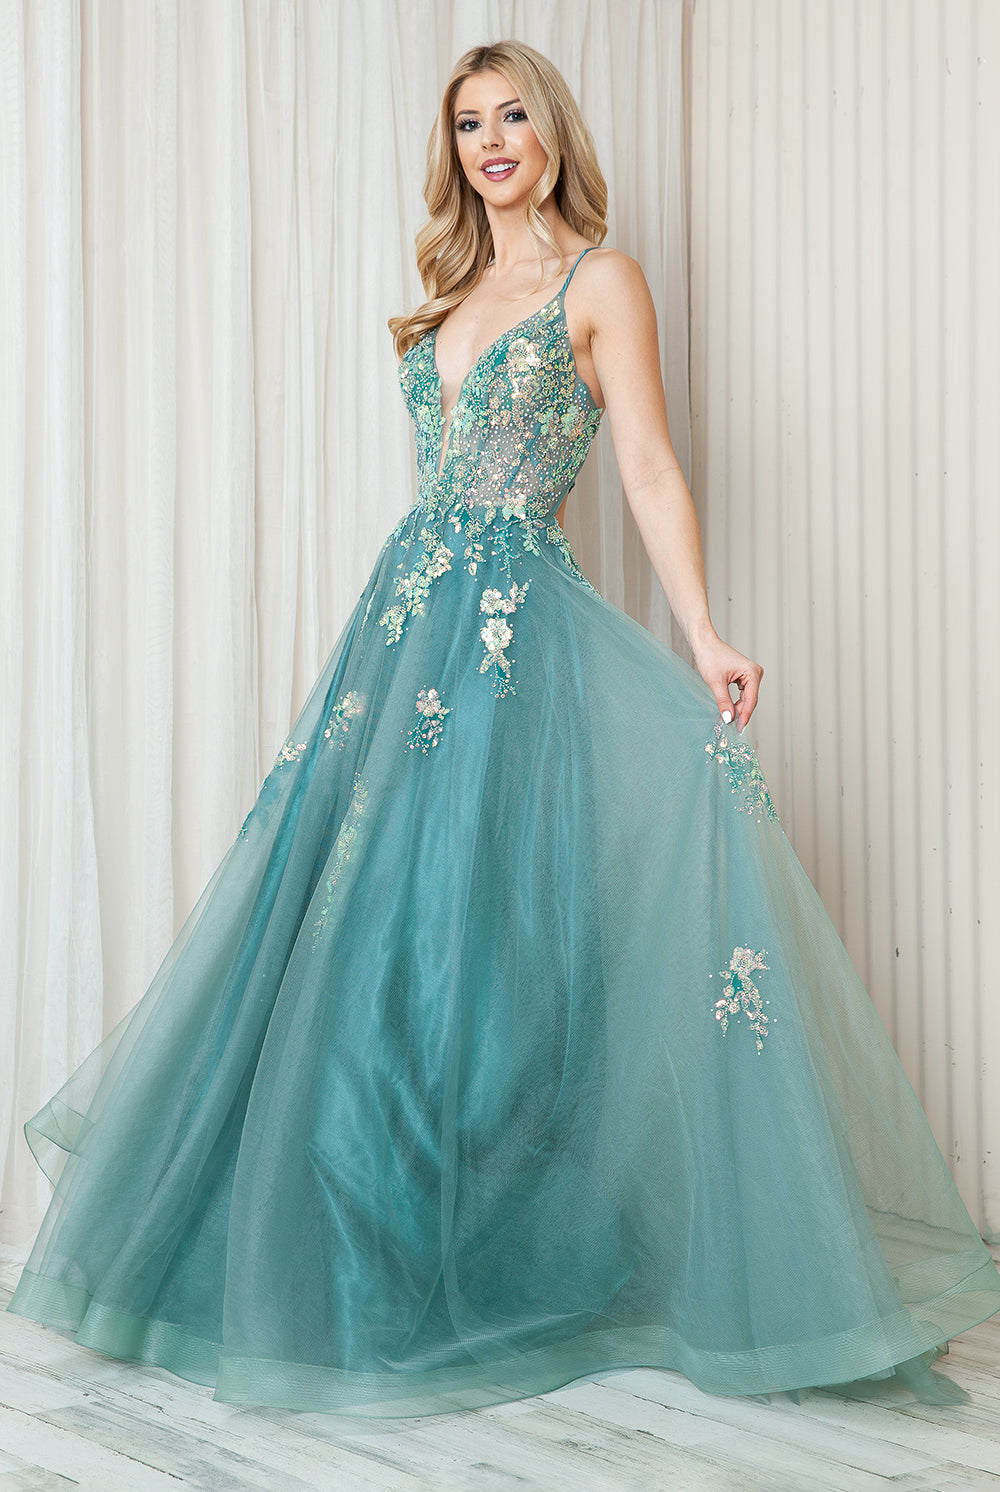 Tulle Skirt Lace High Slit Long Prom Dress-smcdress